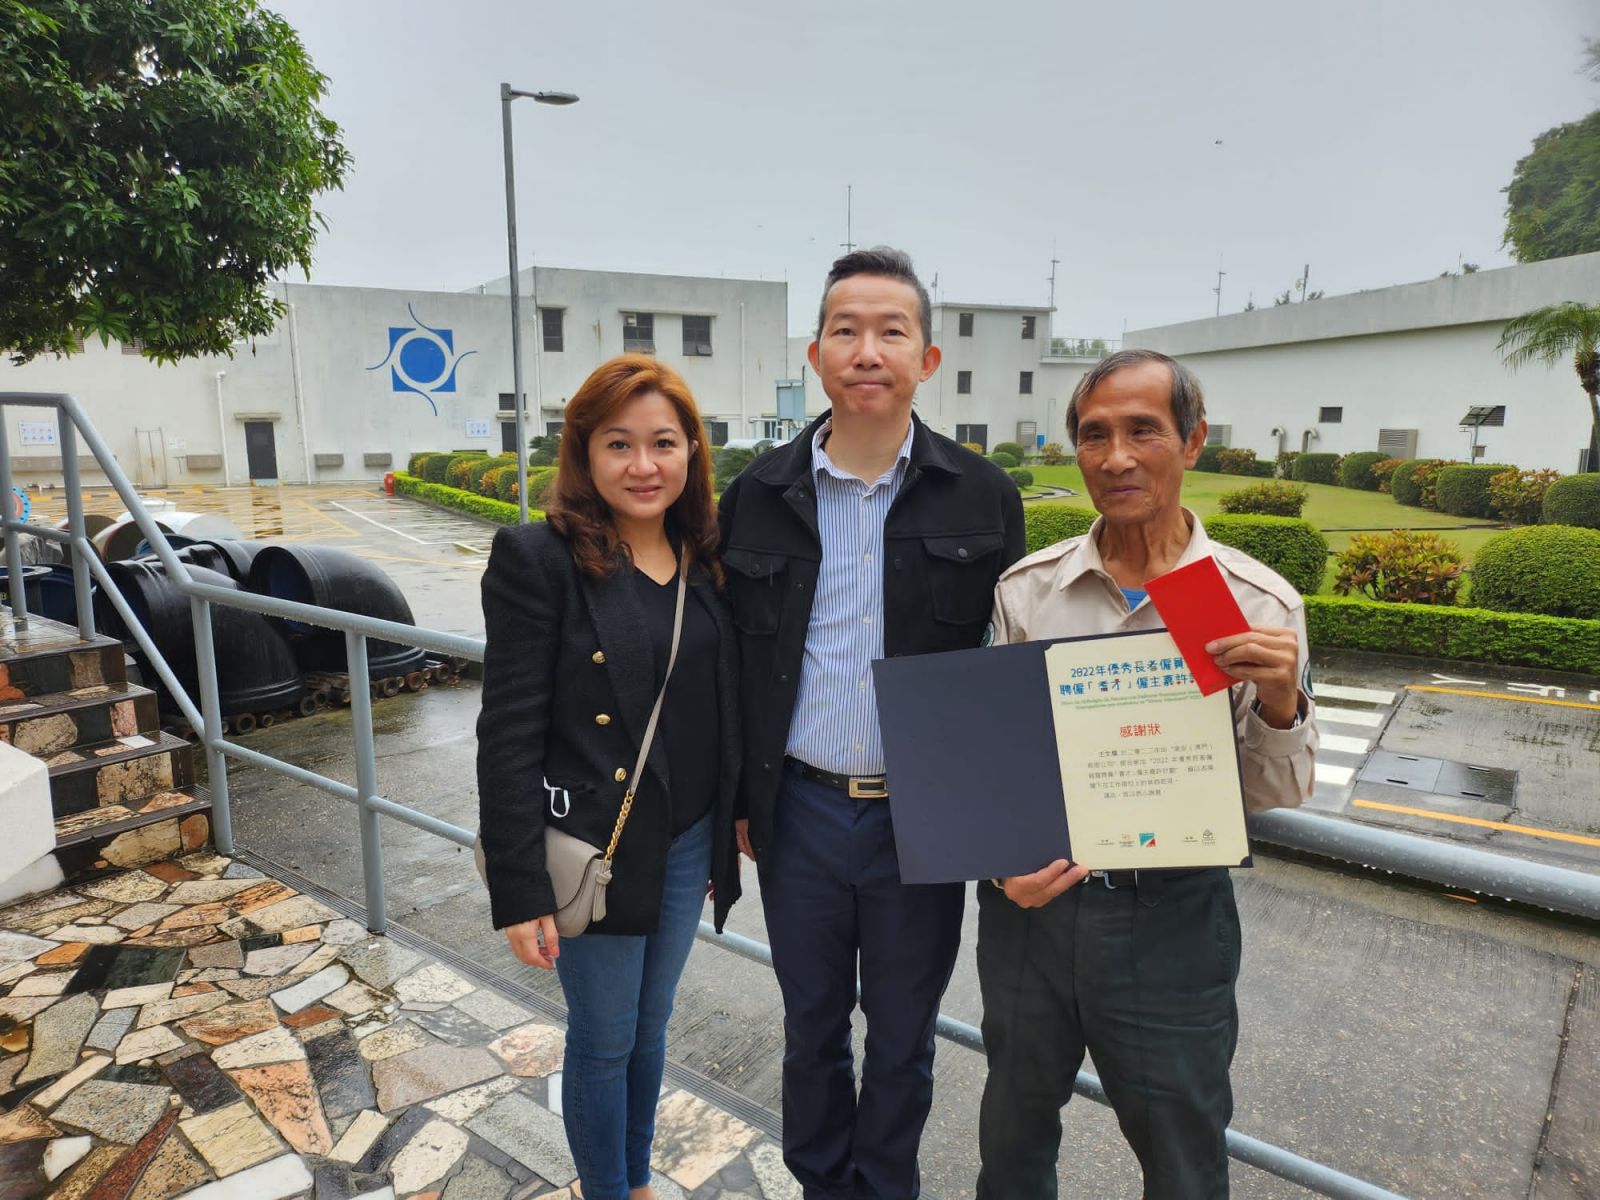 Seniors Employer Recognition for Guardforce Macau